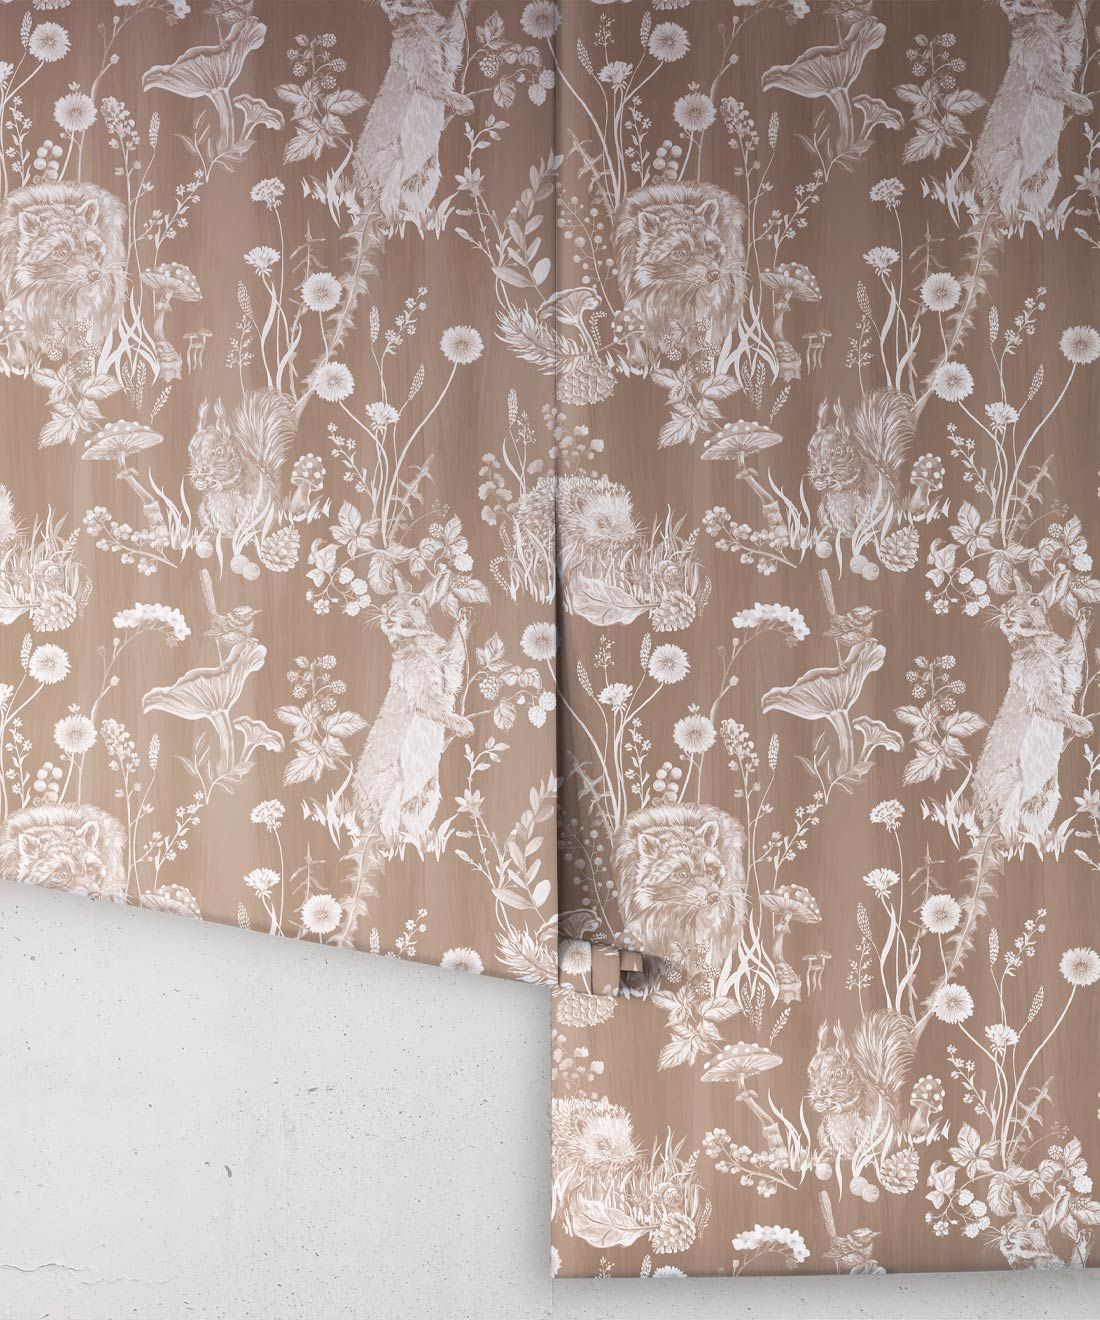 Woodland Friends Wallpaper • Forest Wallpaper with rabbits, hares, raccoons • Iryna Ruggeri • Ecru • Rolls